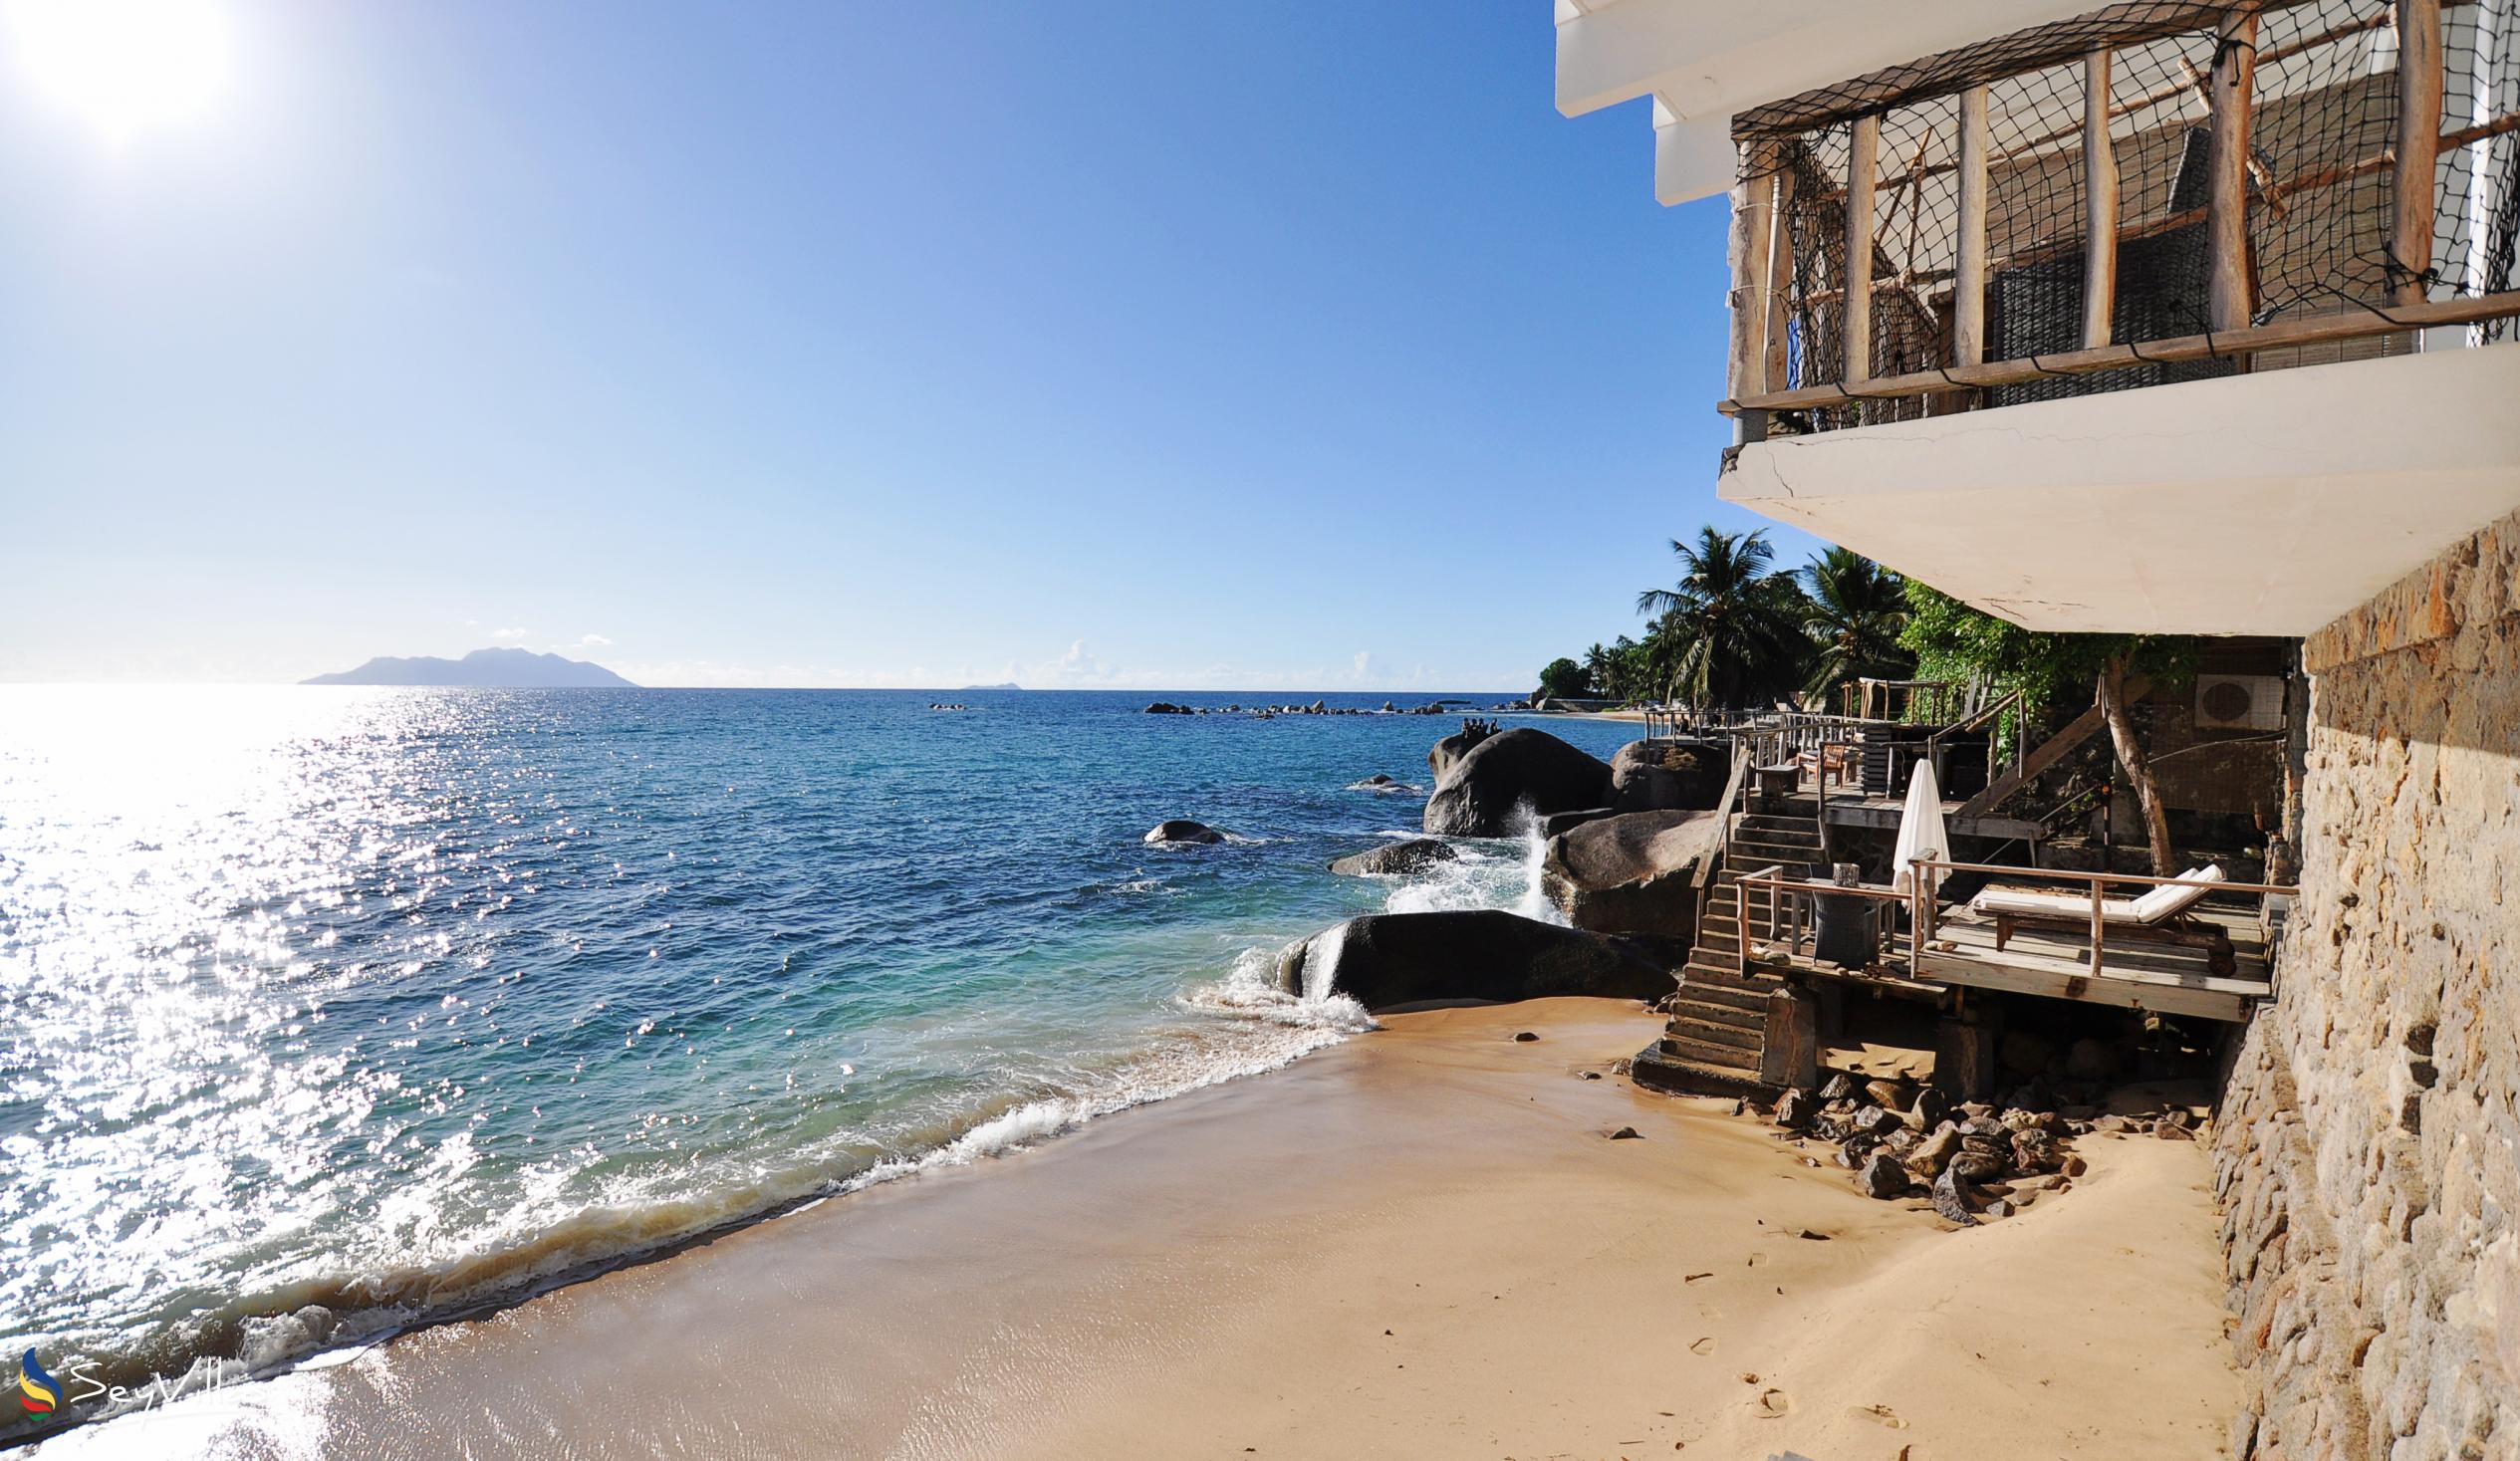 Photo 4: Bliss Hotel - Outdoor area - Mahé (Seychelles)